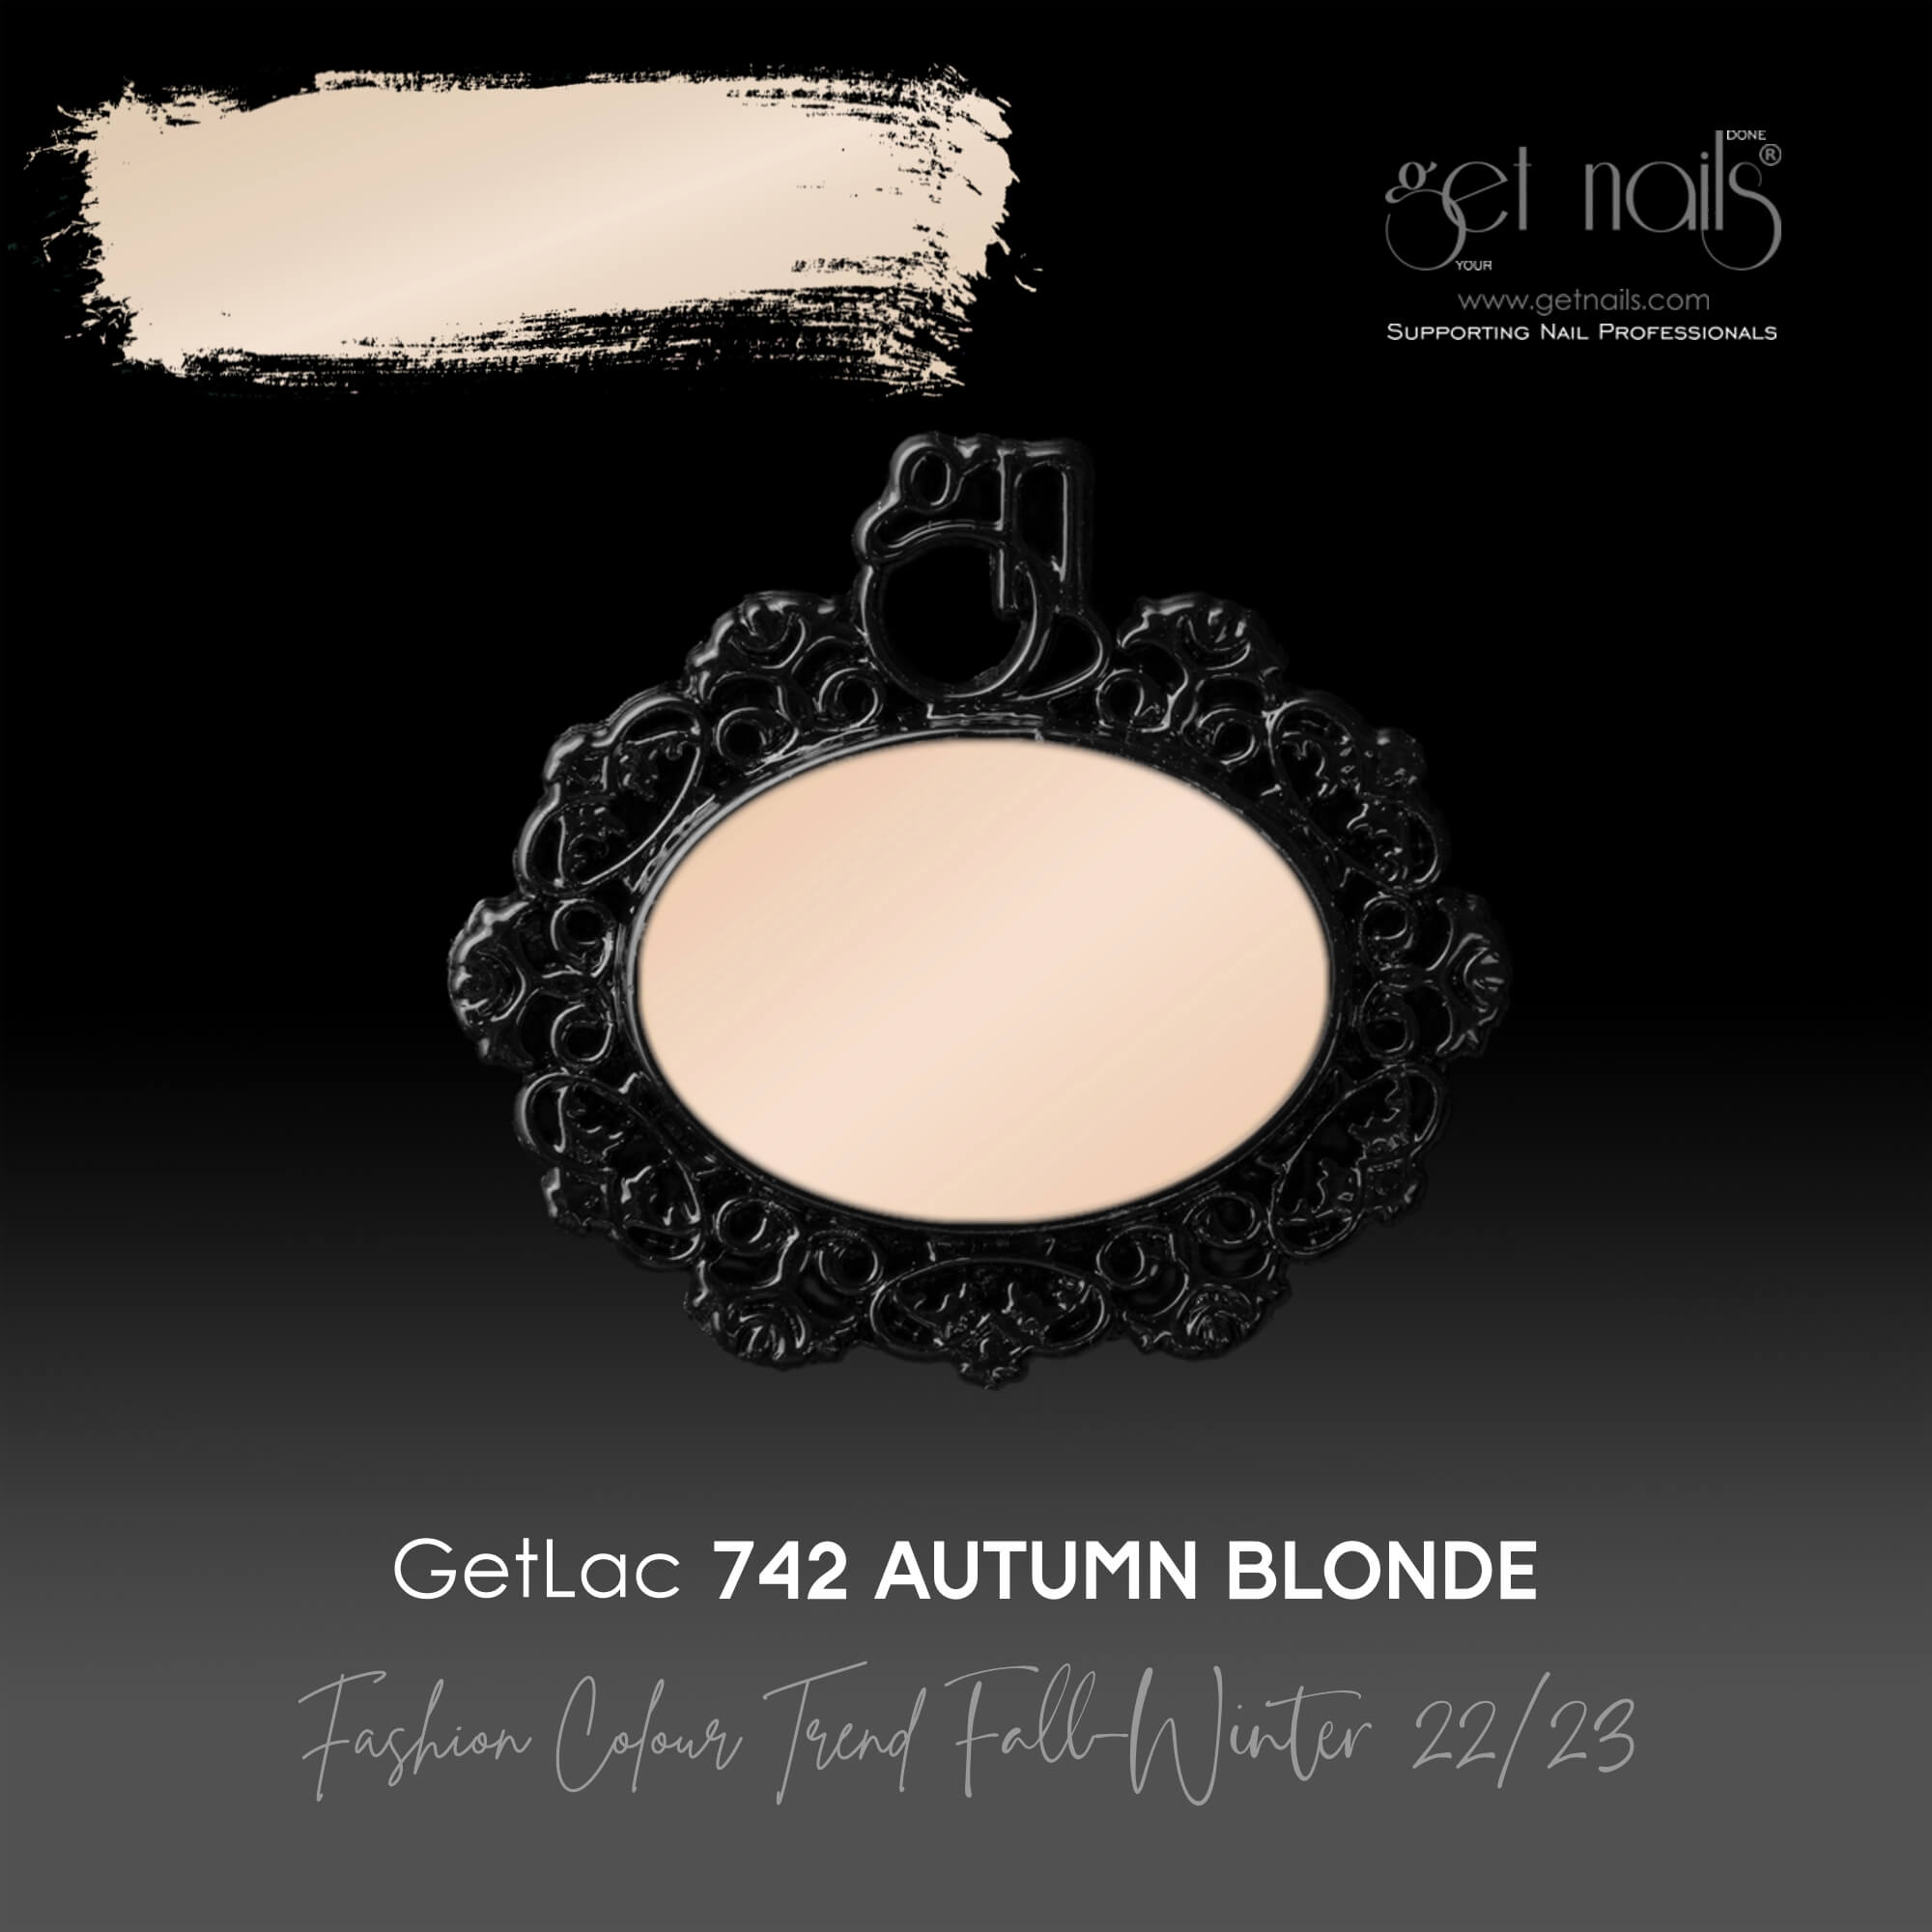 Get Nails Austria - GetLac 742 Autumn Blonde 15g